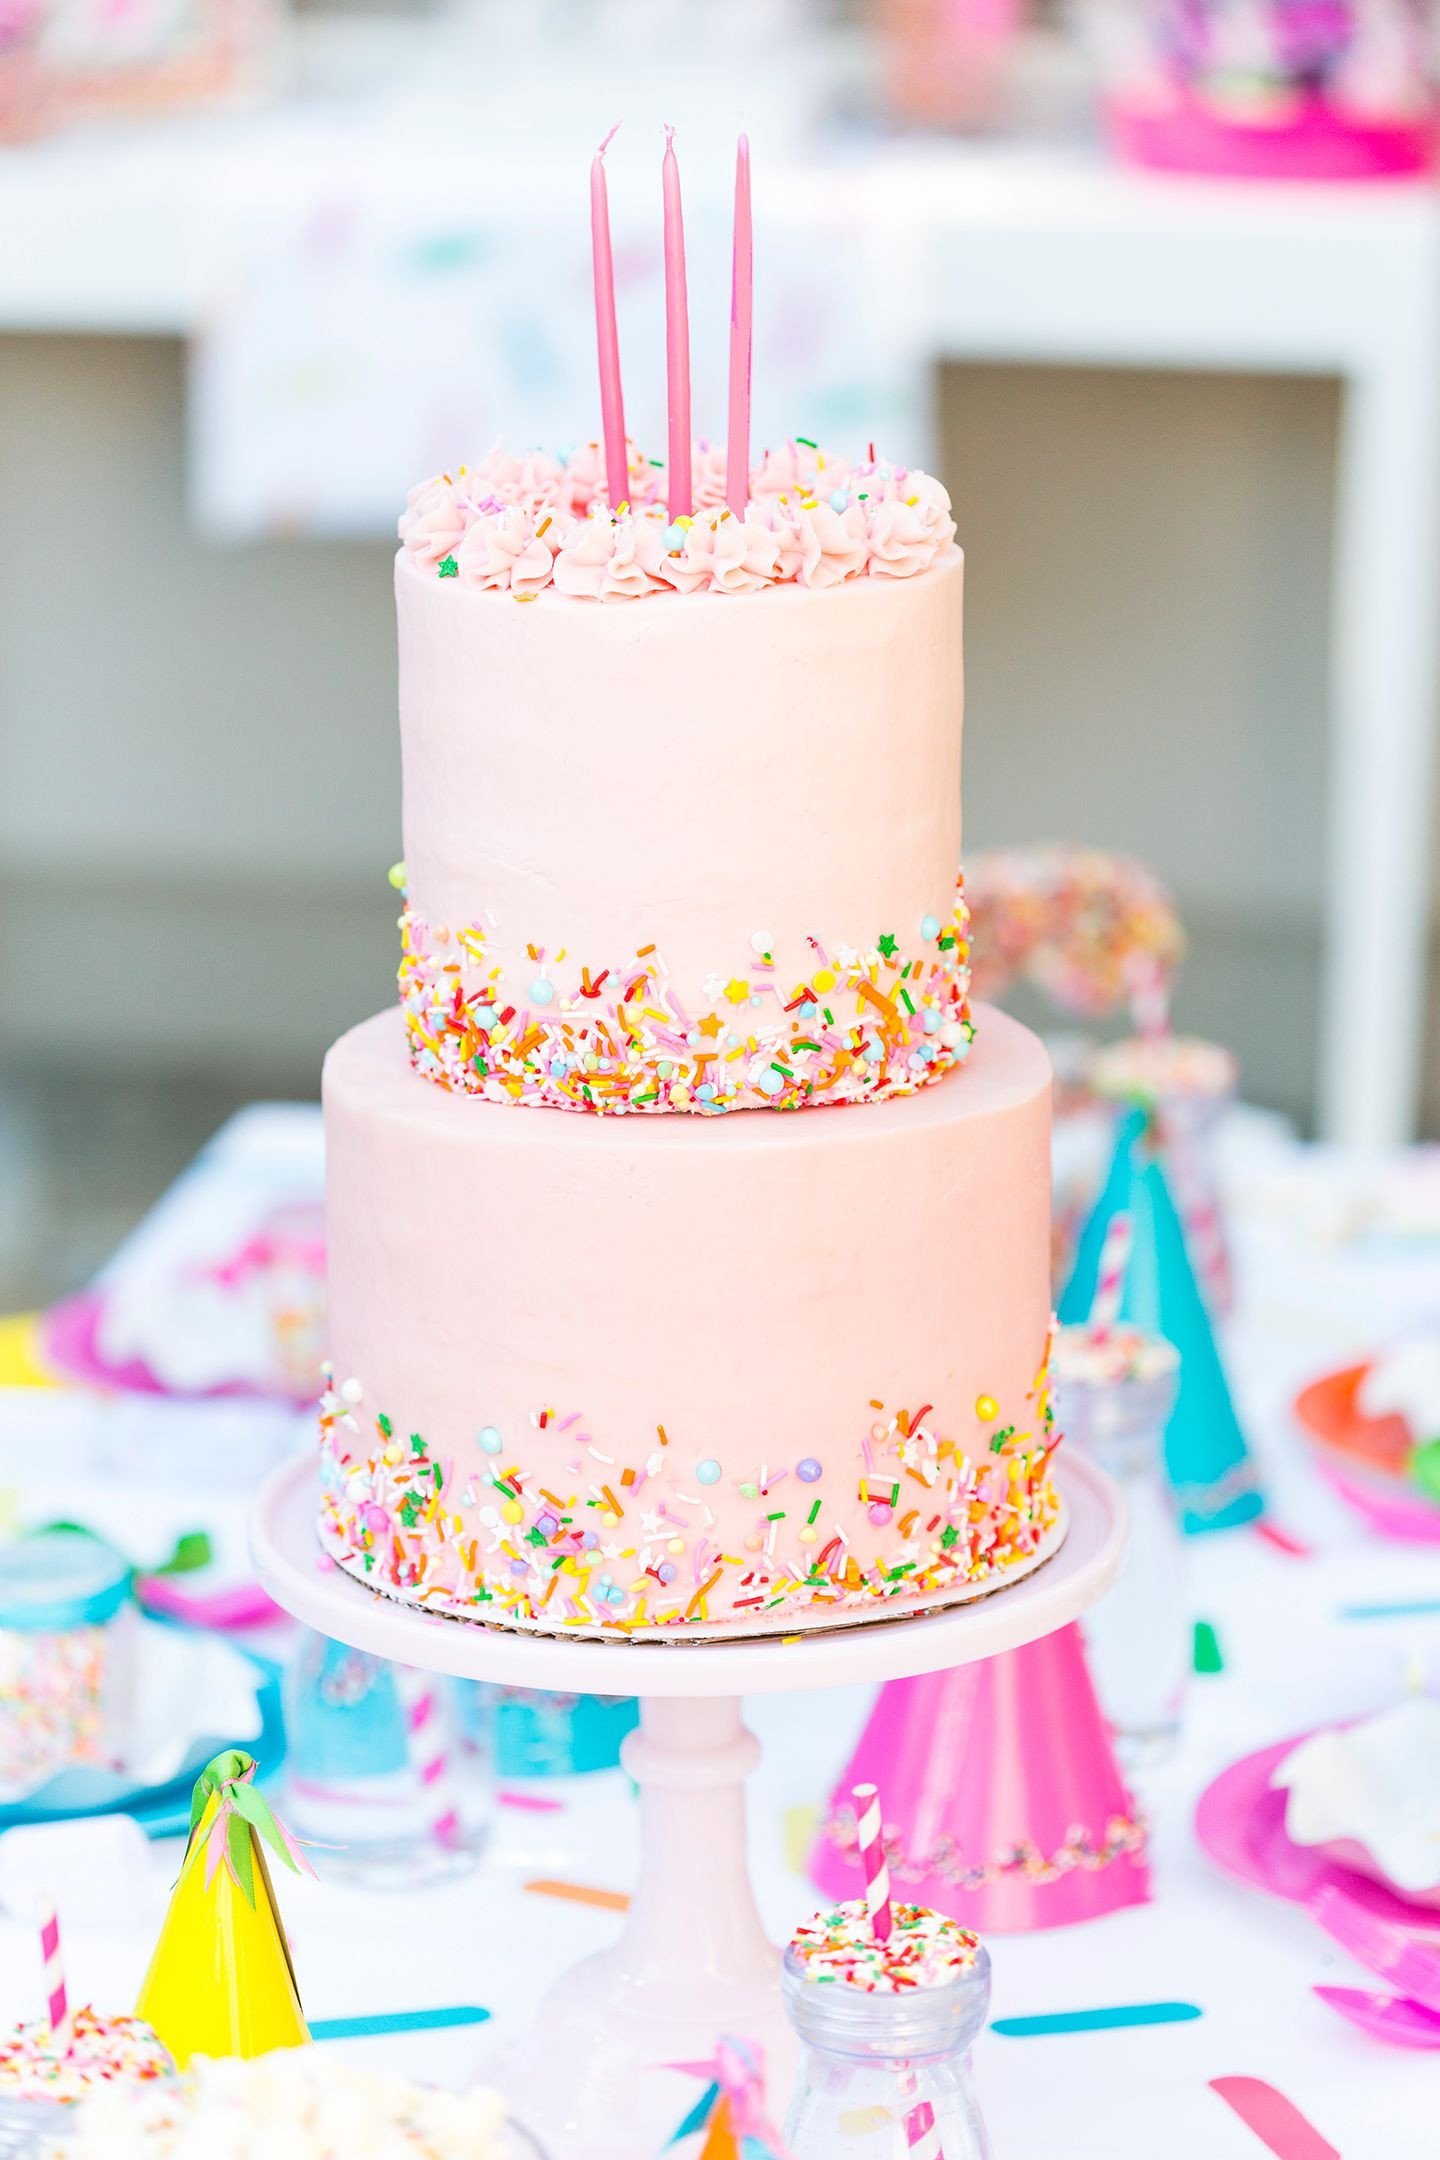 Cake Decorating Birthday Party
 Sprinkle Themed Birthday Party